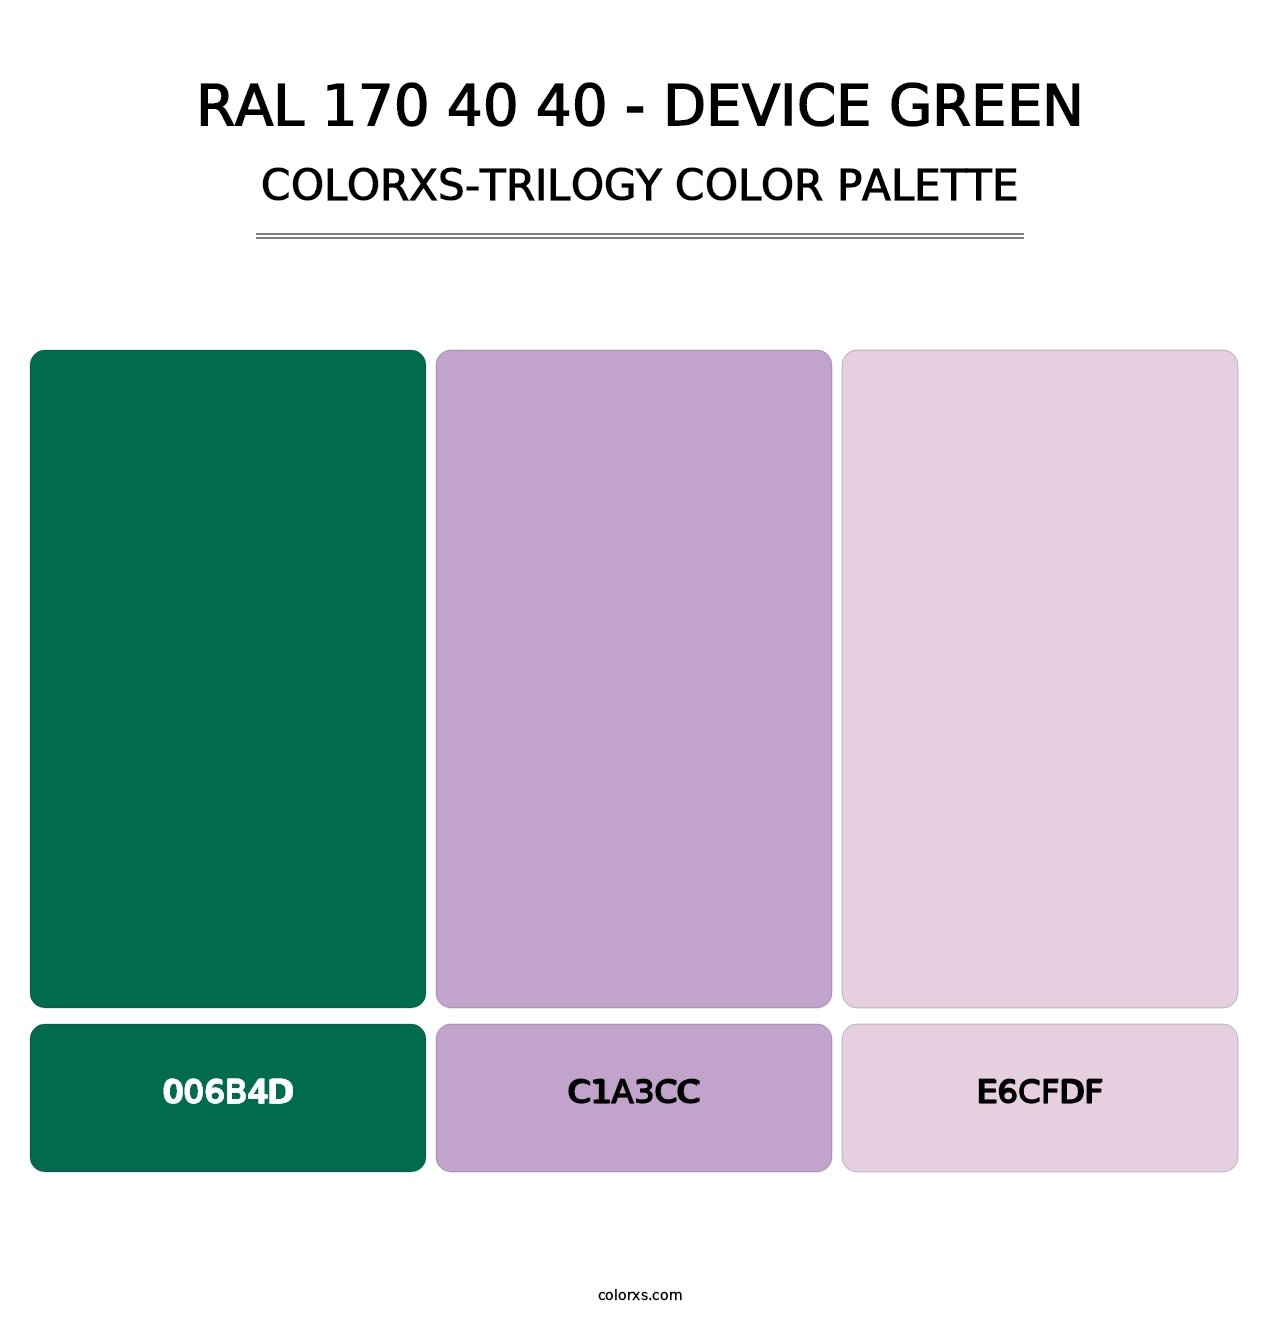 RAL 170 40 40 - Device Green - Colorxs Trilogy Palette